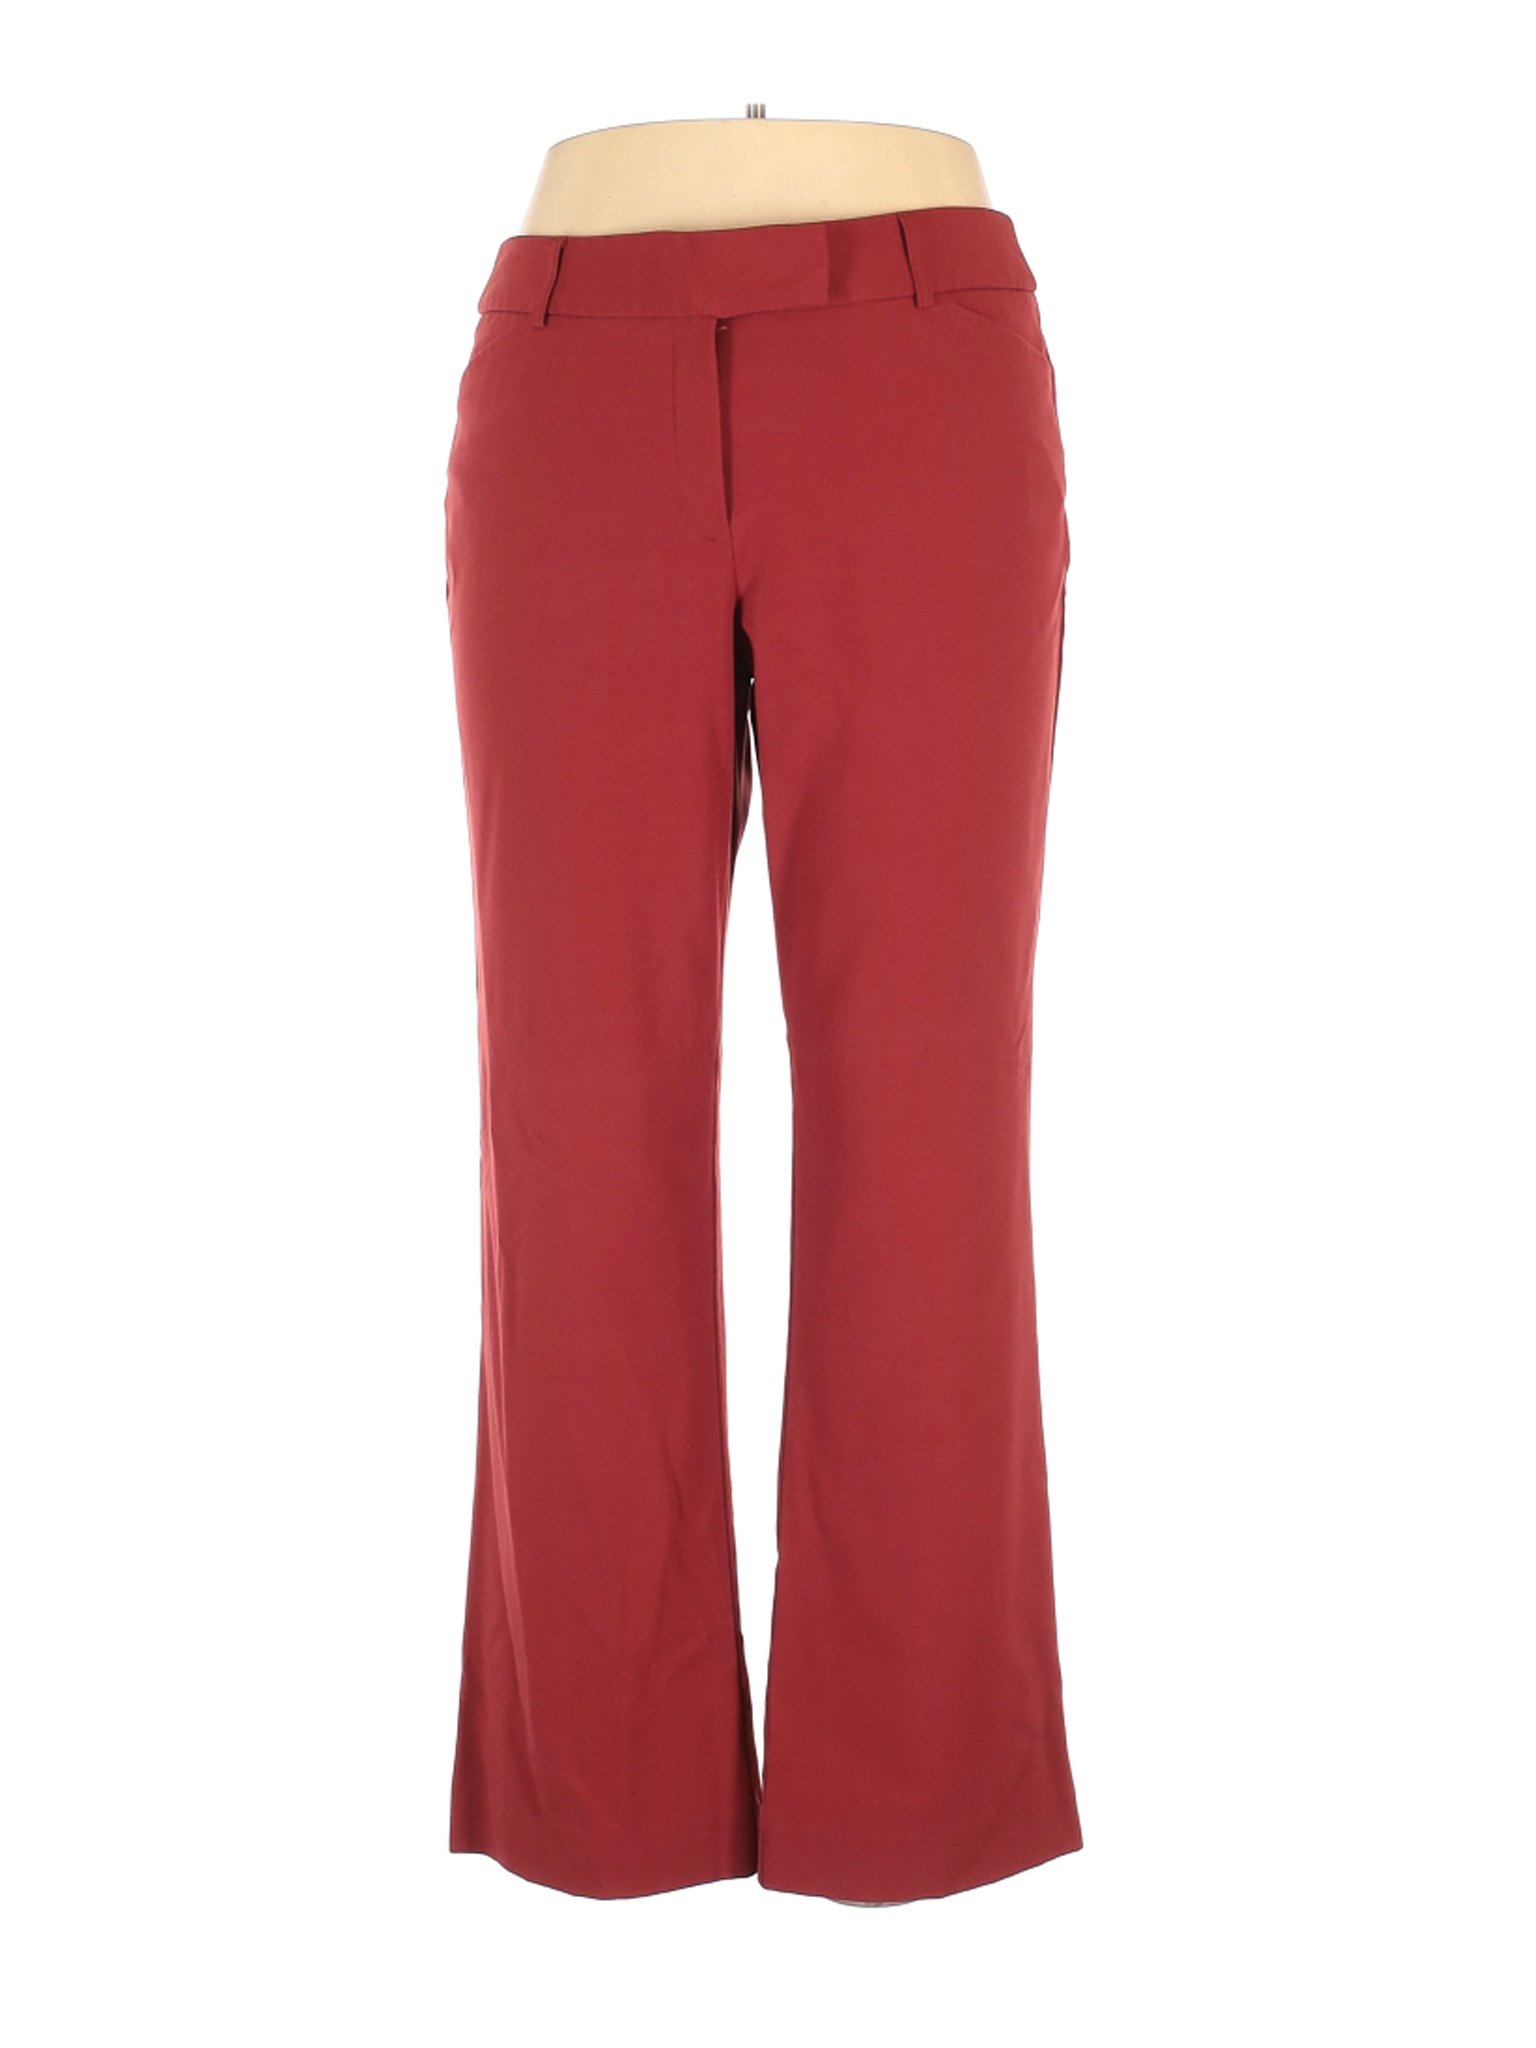 Counterparts Women Red Dress Pants 14 | eBay